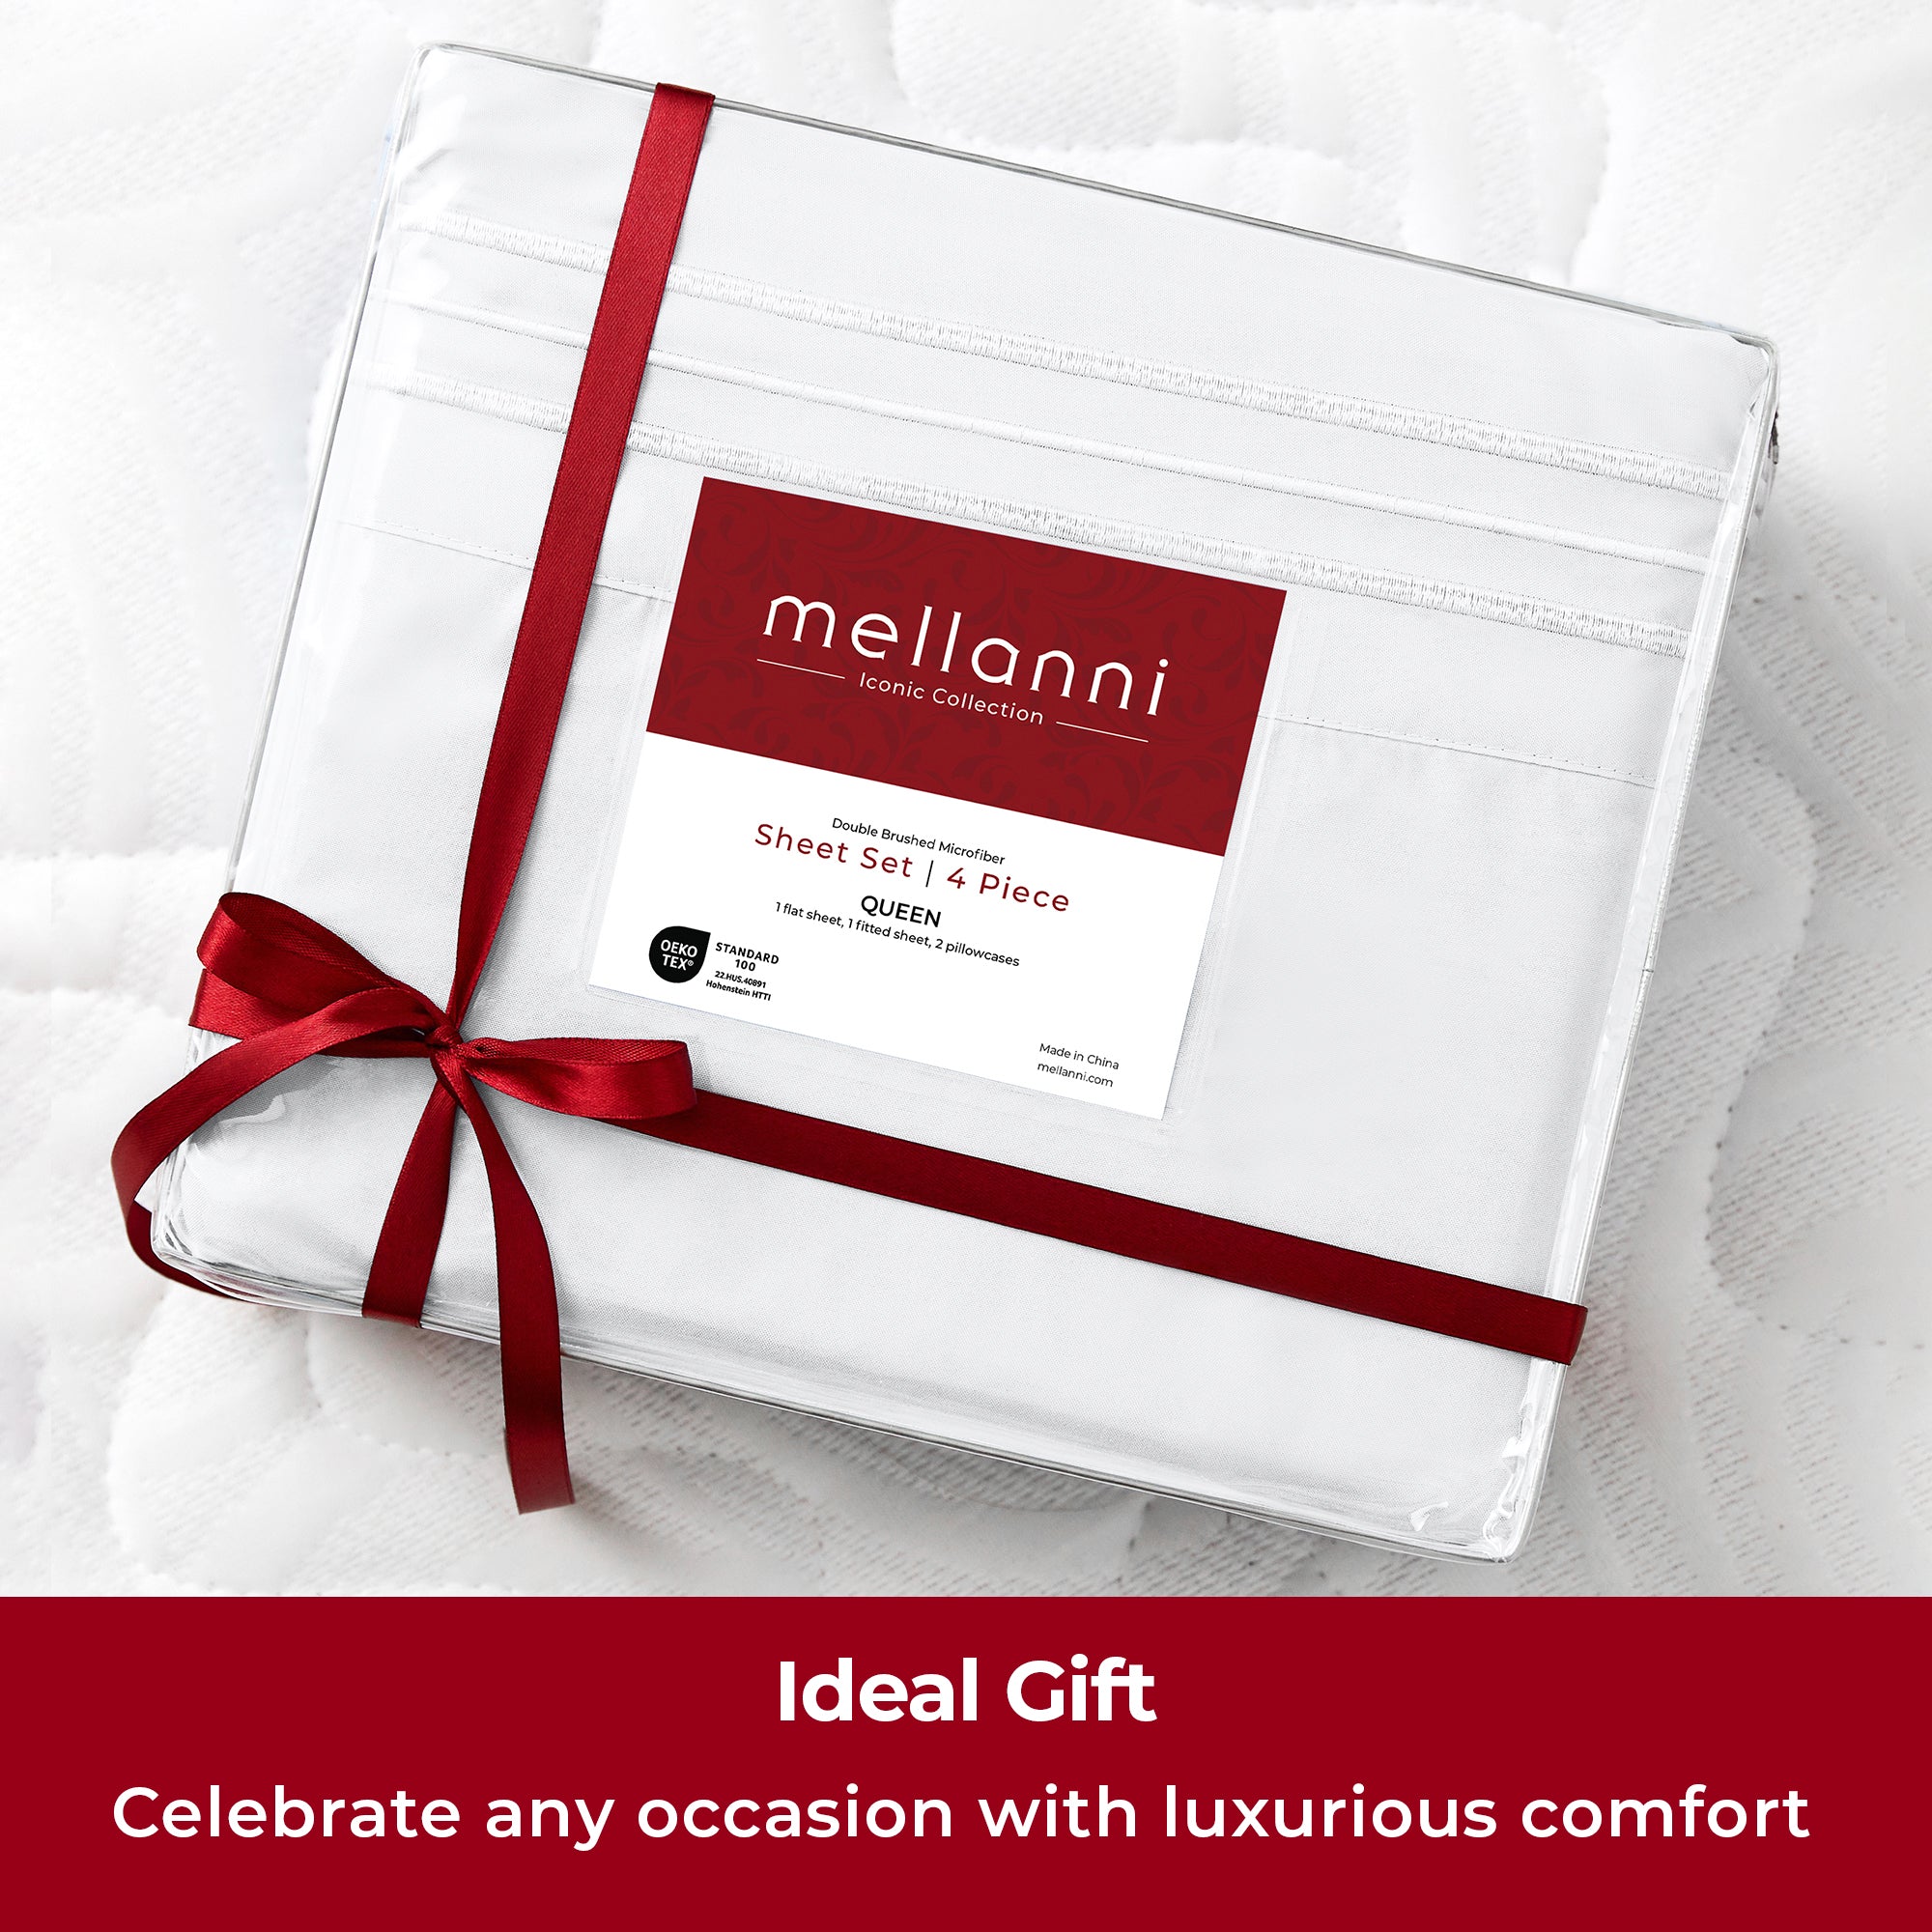 Mellanni Sheet Set Iconic Hotel Luxury Brushed Microfiber, Deep Pocket Sheet, 3 Piece Twin White - image 5 of 7